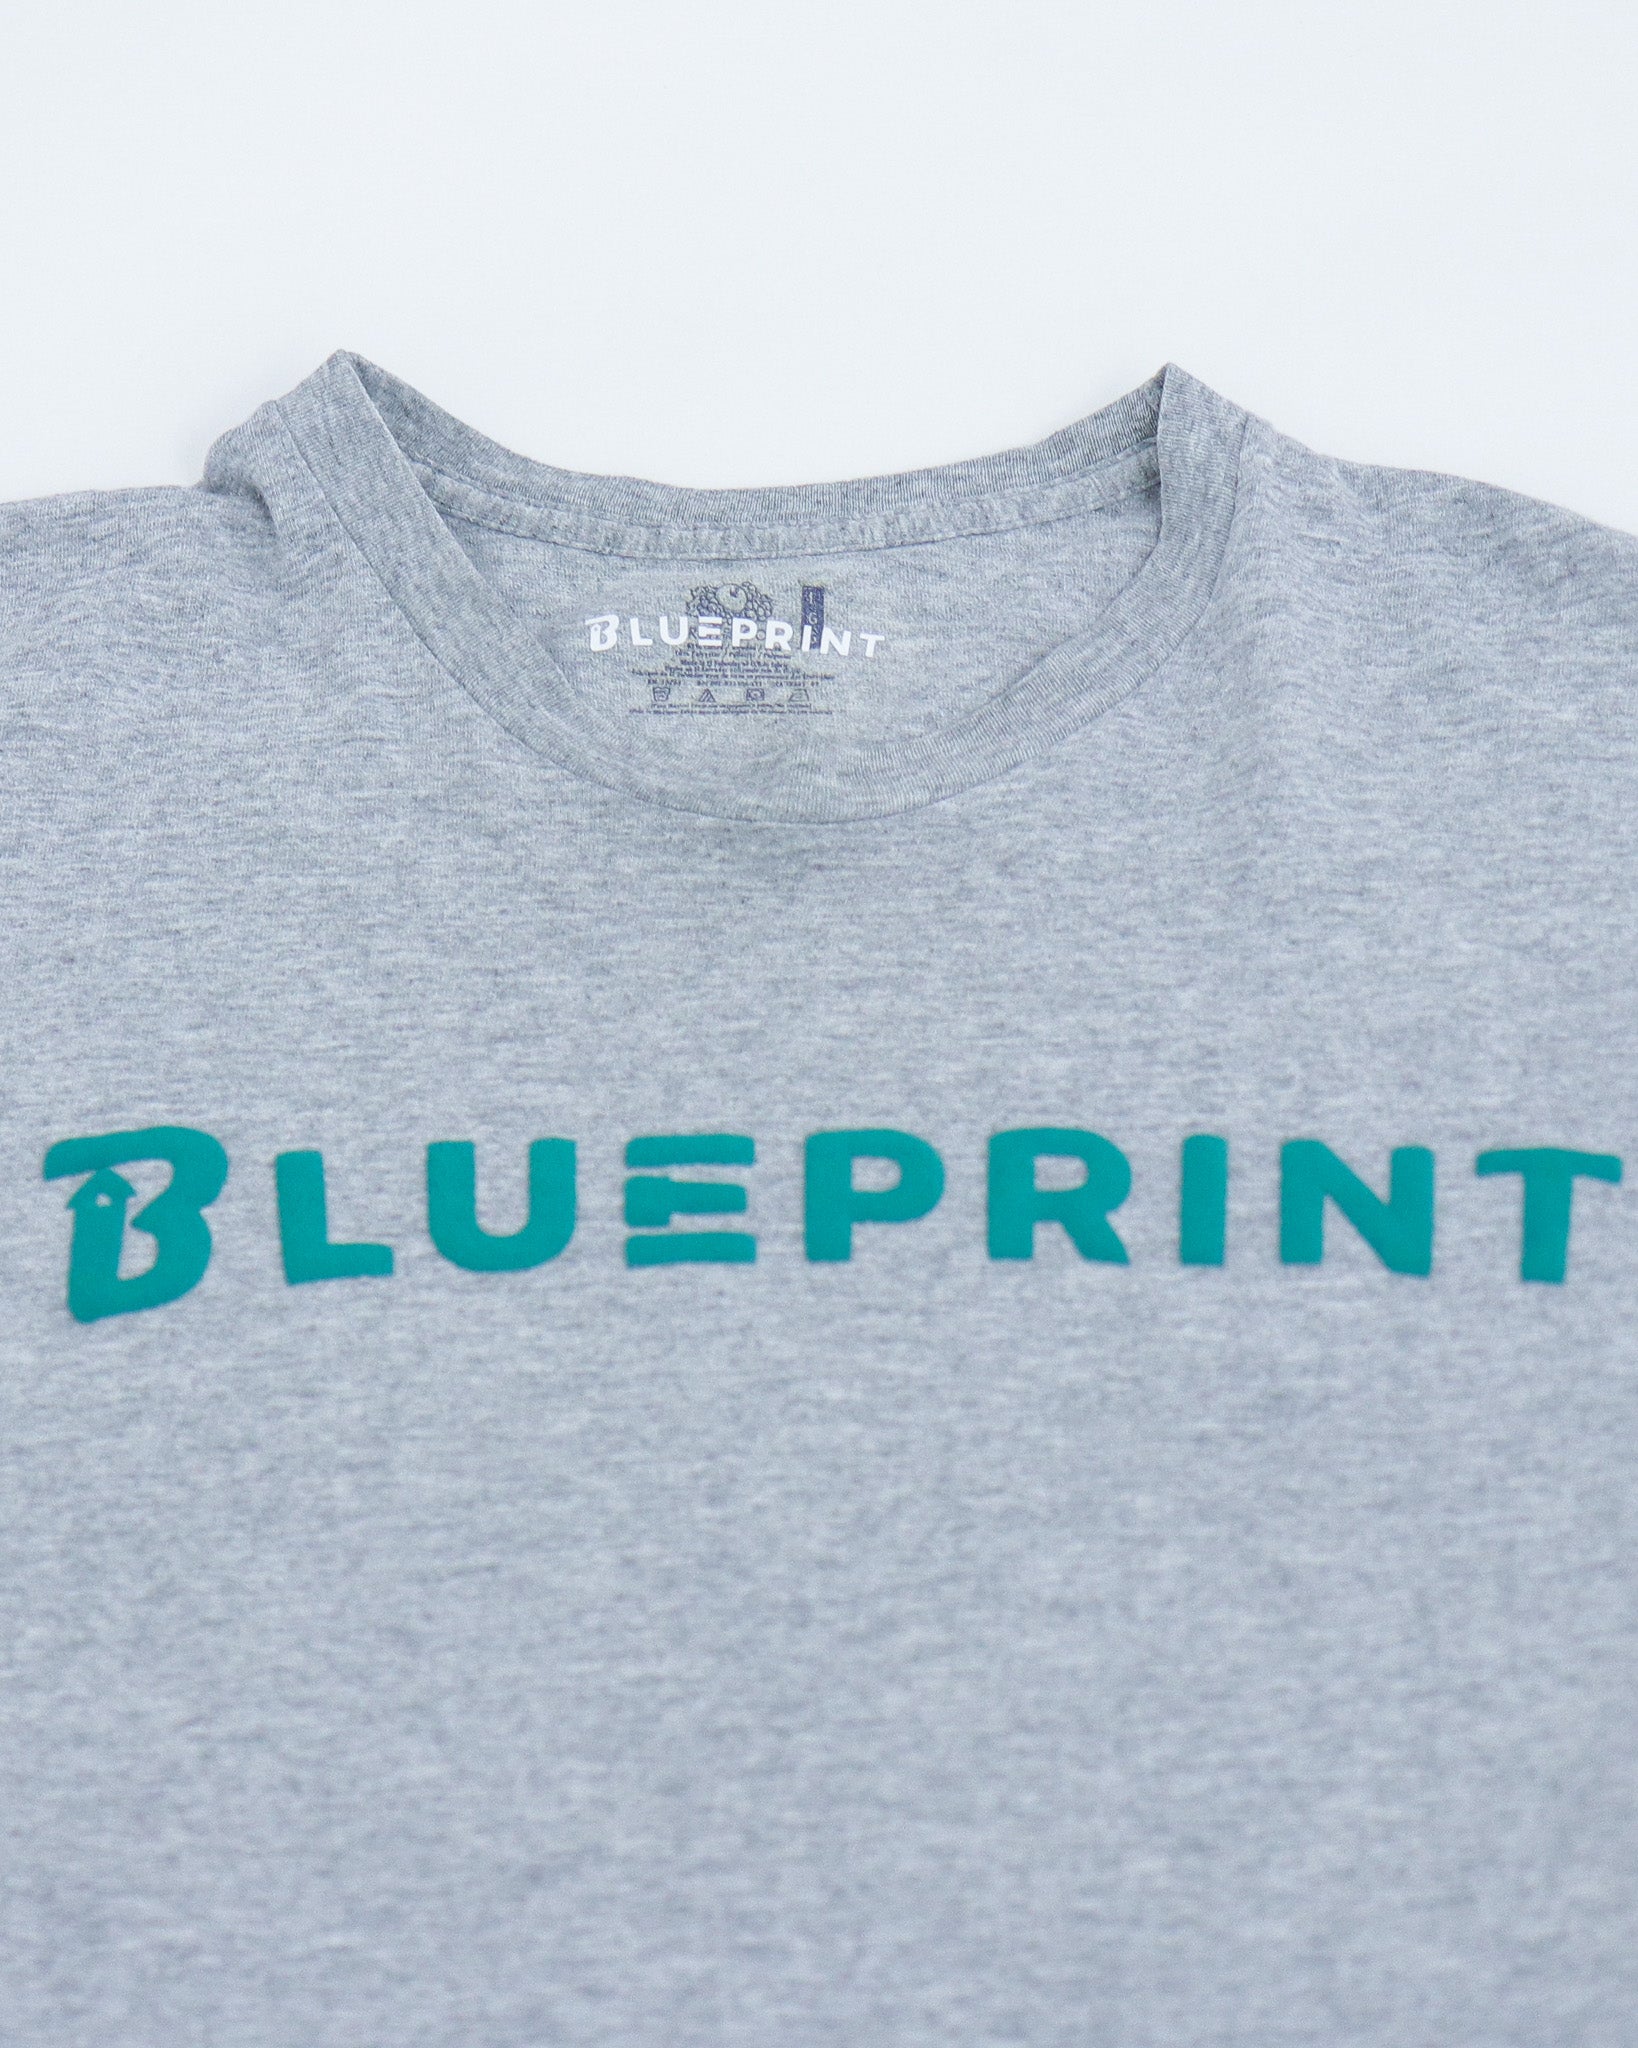 Blueprint Tee - gray/green (Medium)